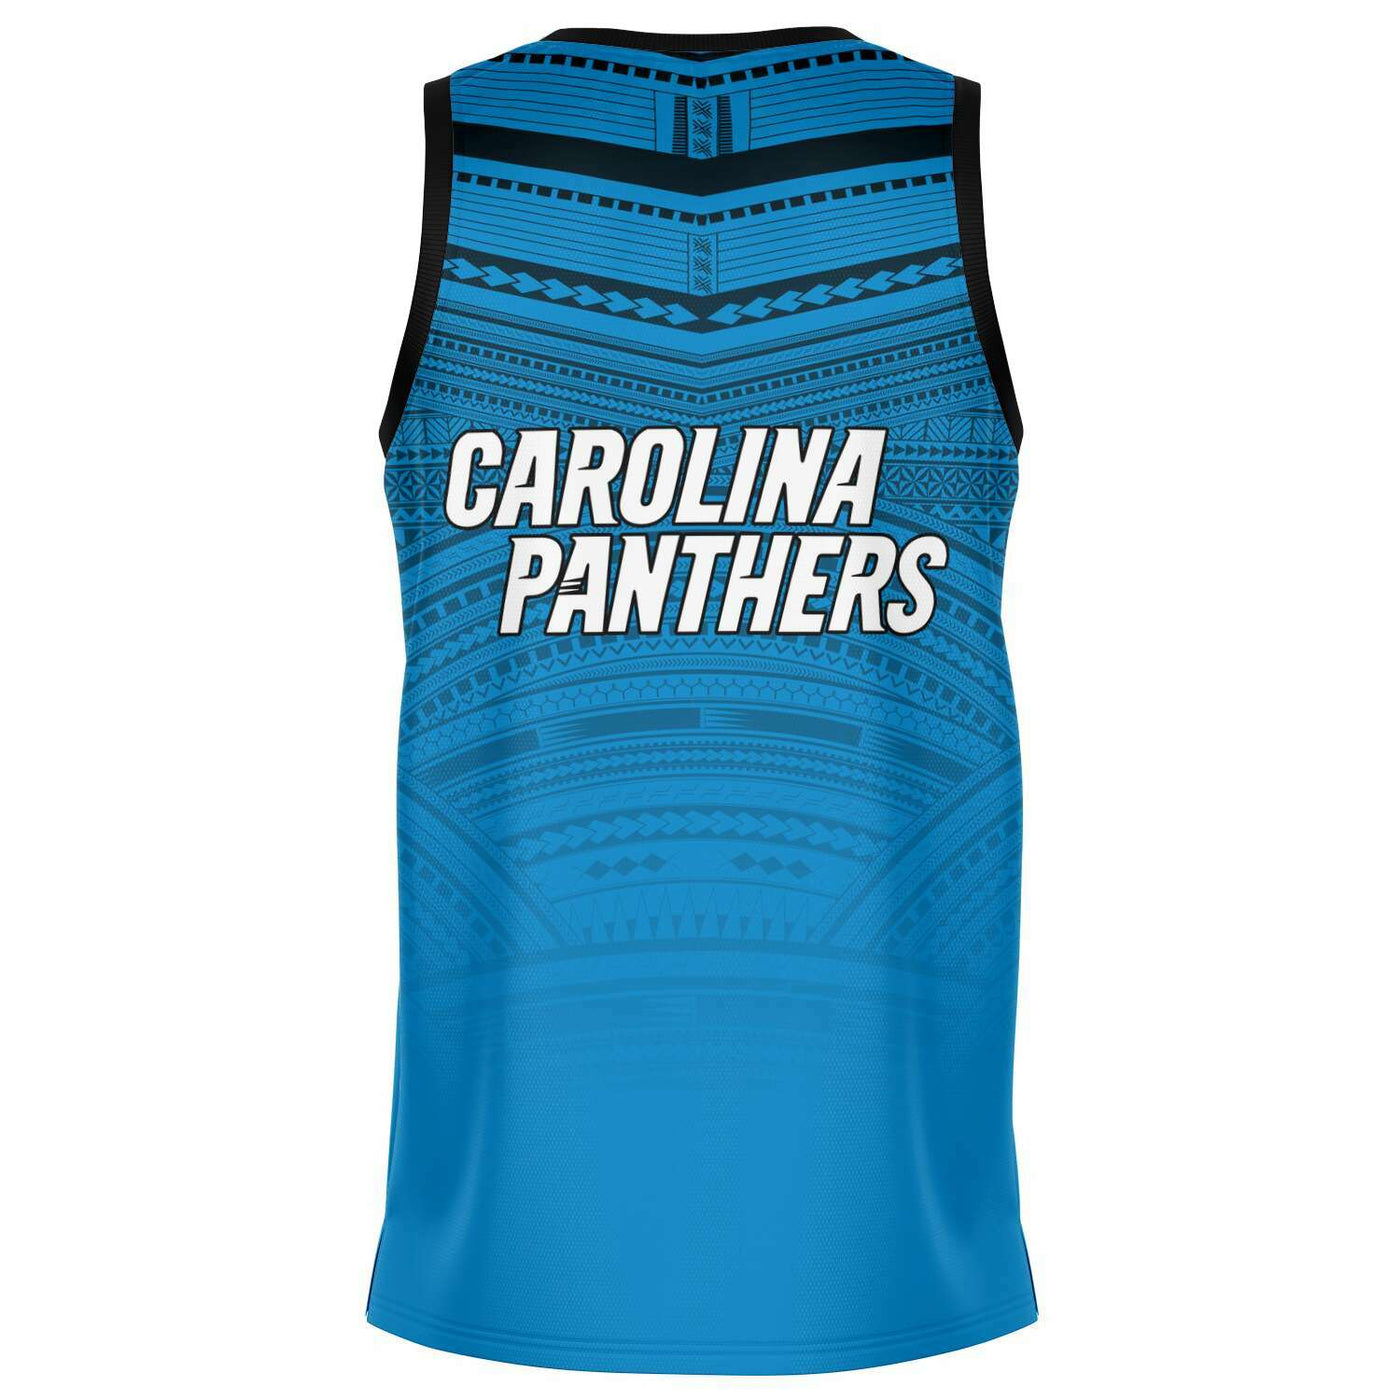 Panthers Custom Basketball Uniform